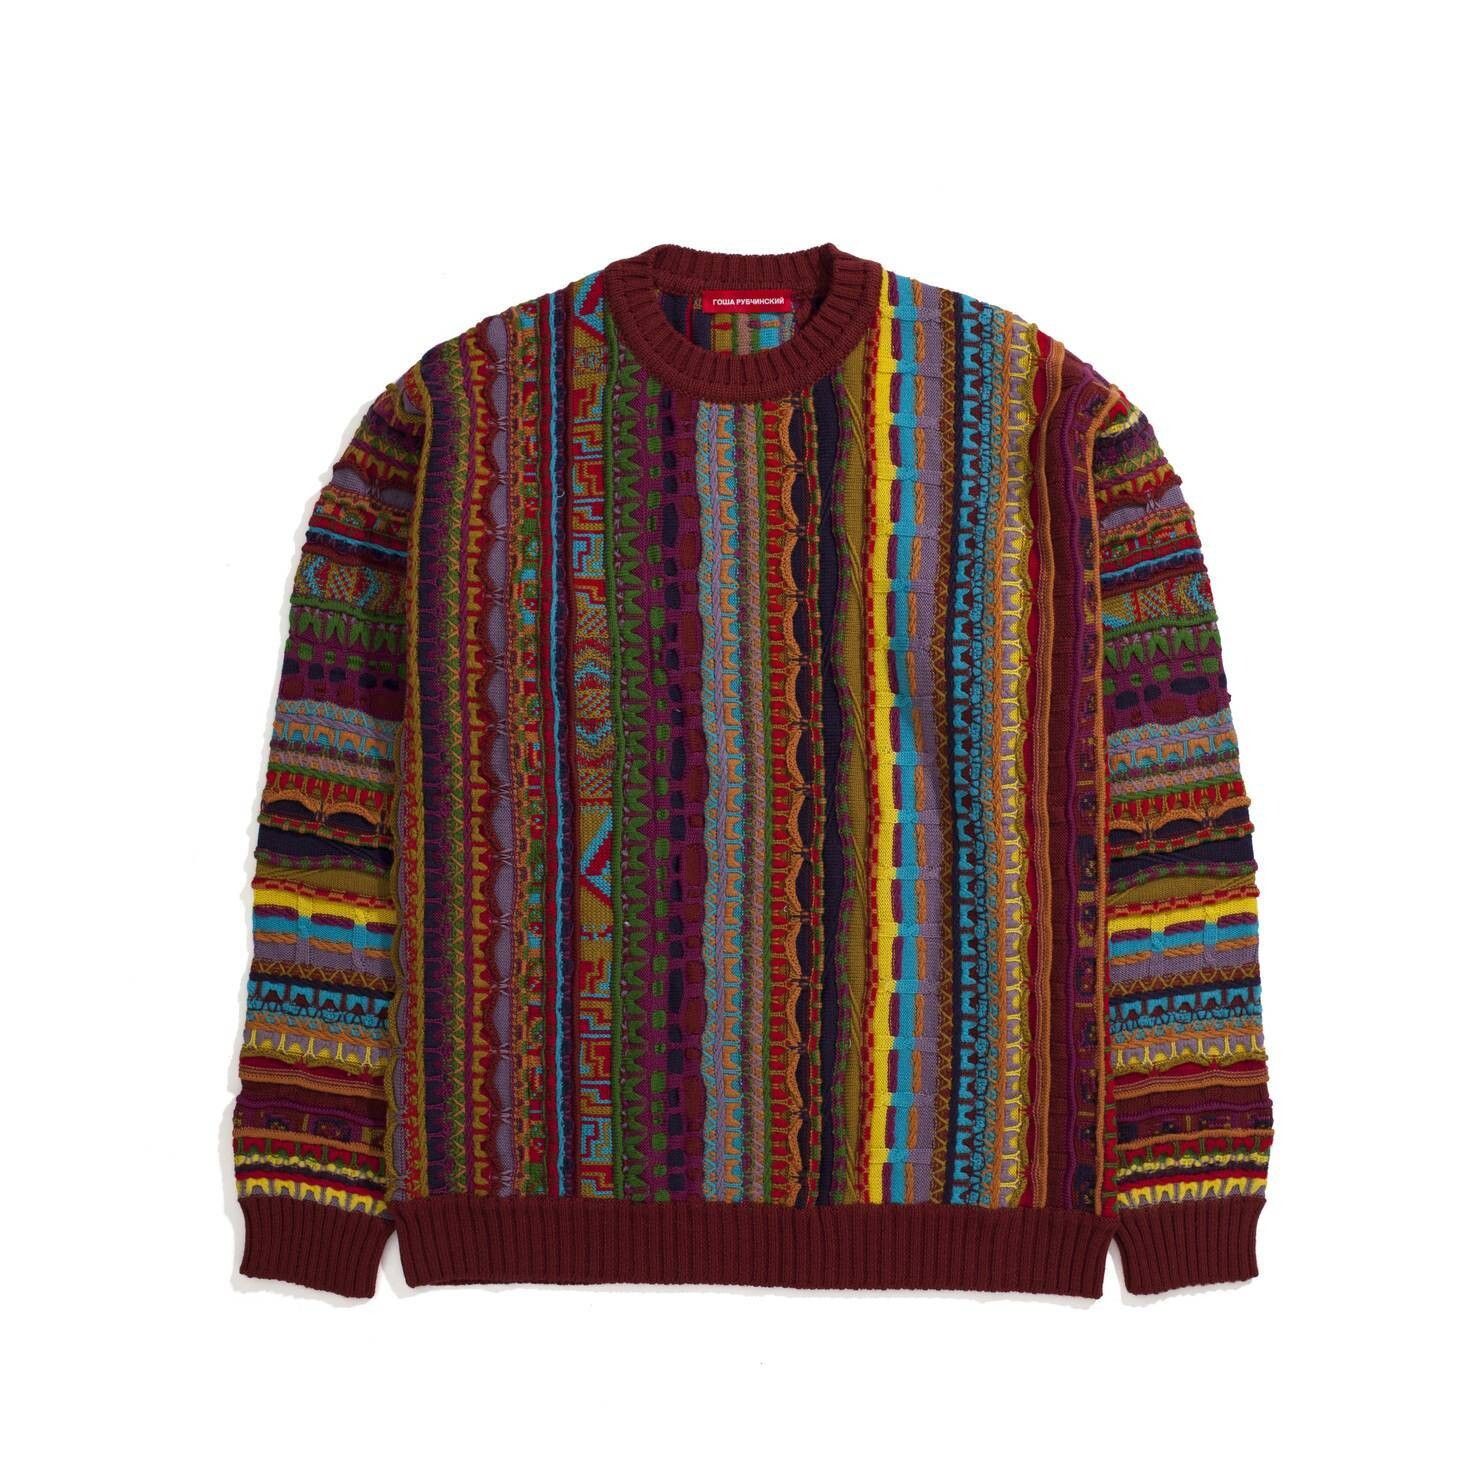 Gosha Rubchinskiy S/S 2016 Gosha "Coogi" Sweater Size US M / EU 48-50 / 2 - 1 Preview